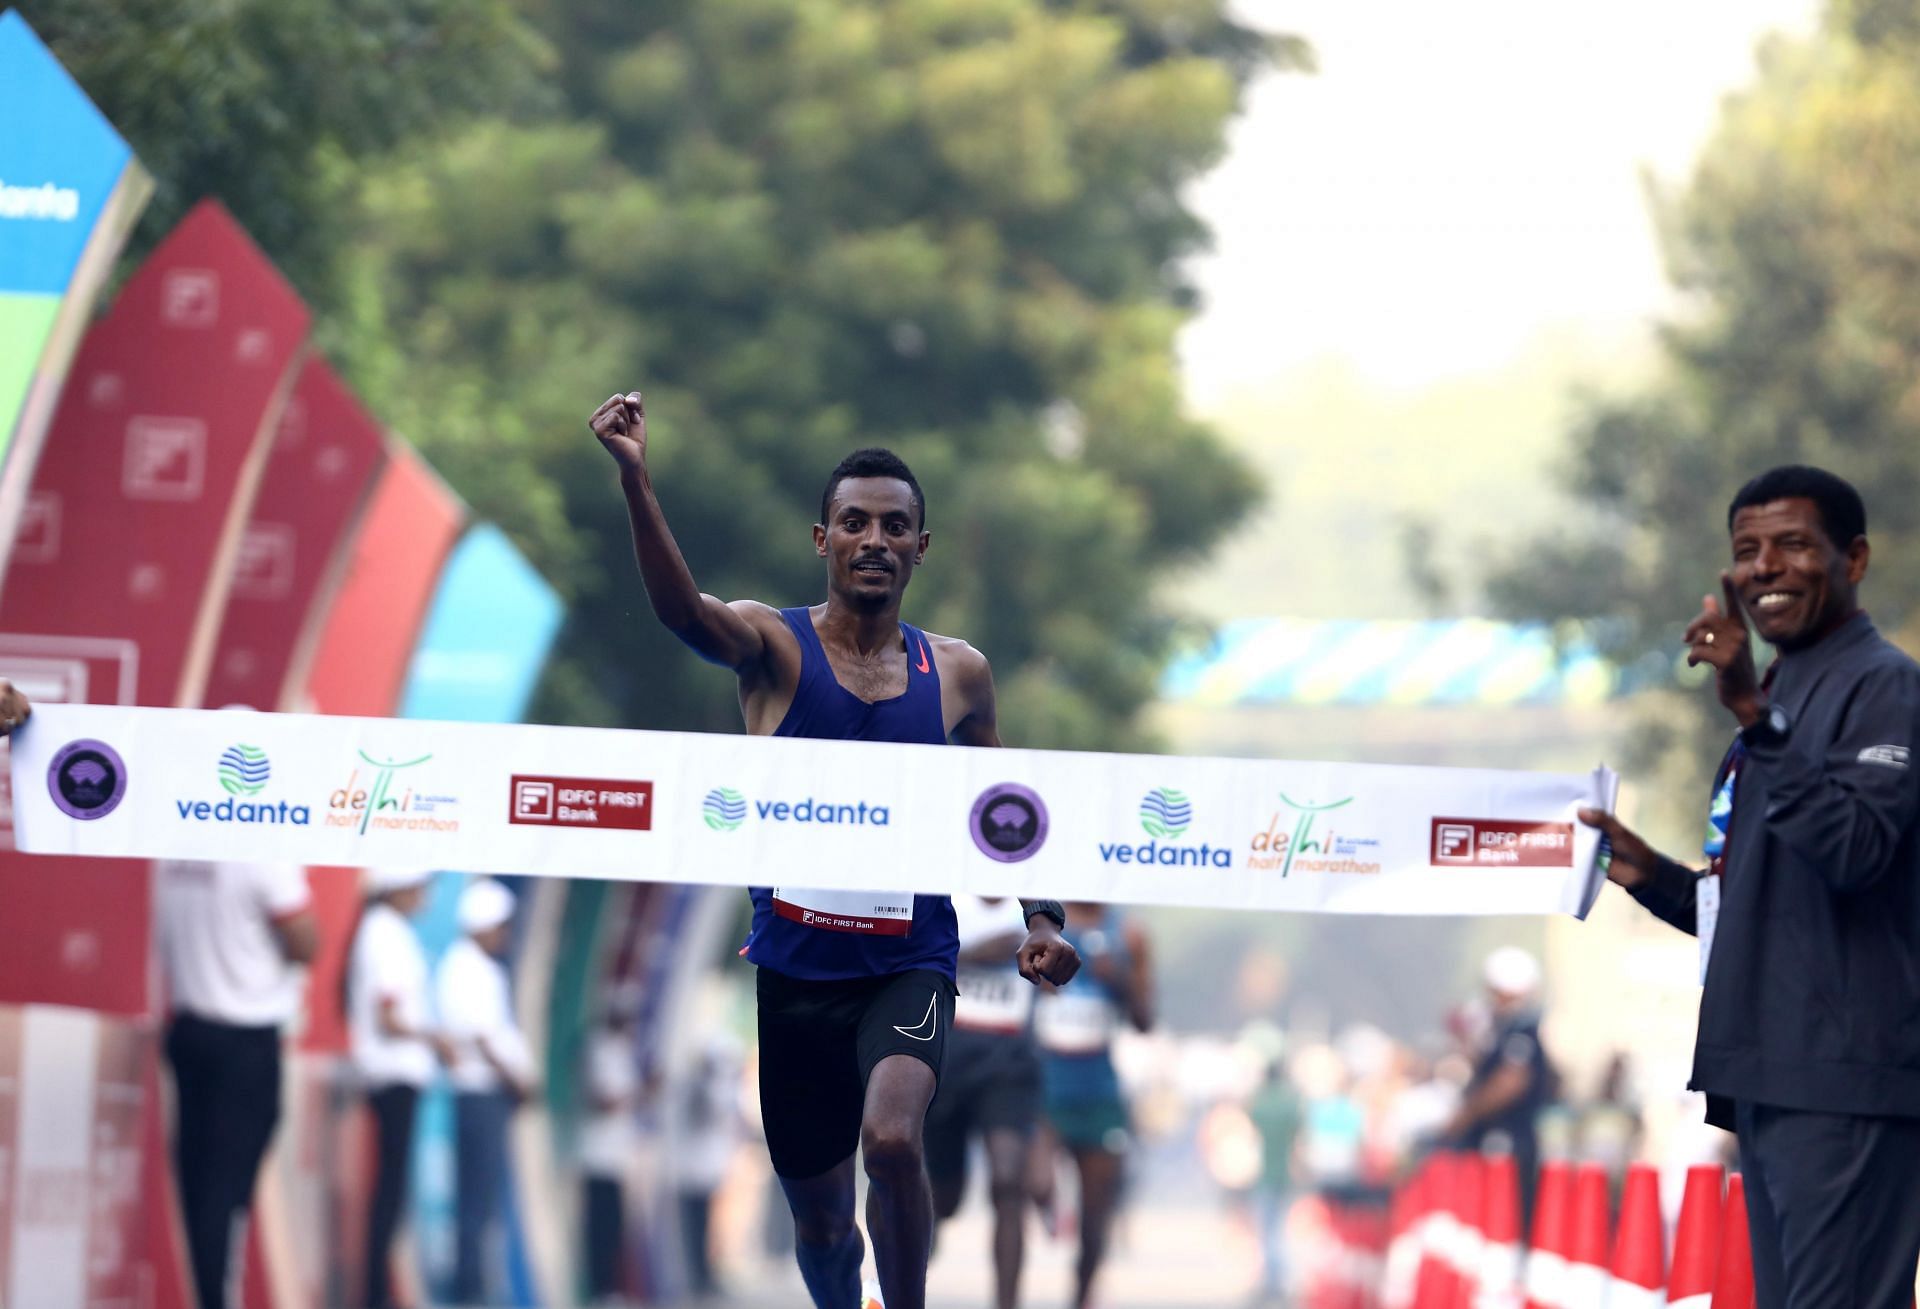 Ethiopia&rsquo;s Chela Regasa sprints to victory in the Vedanta Delhi Half Marathon in Delhi on Sunday. Photo credit Procam International